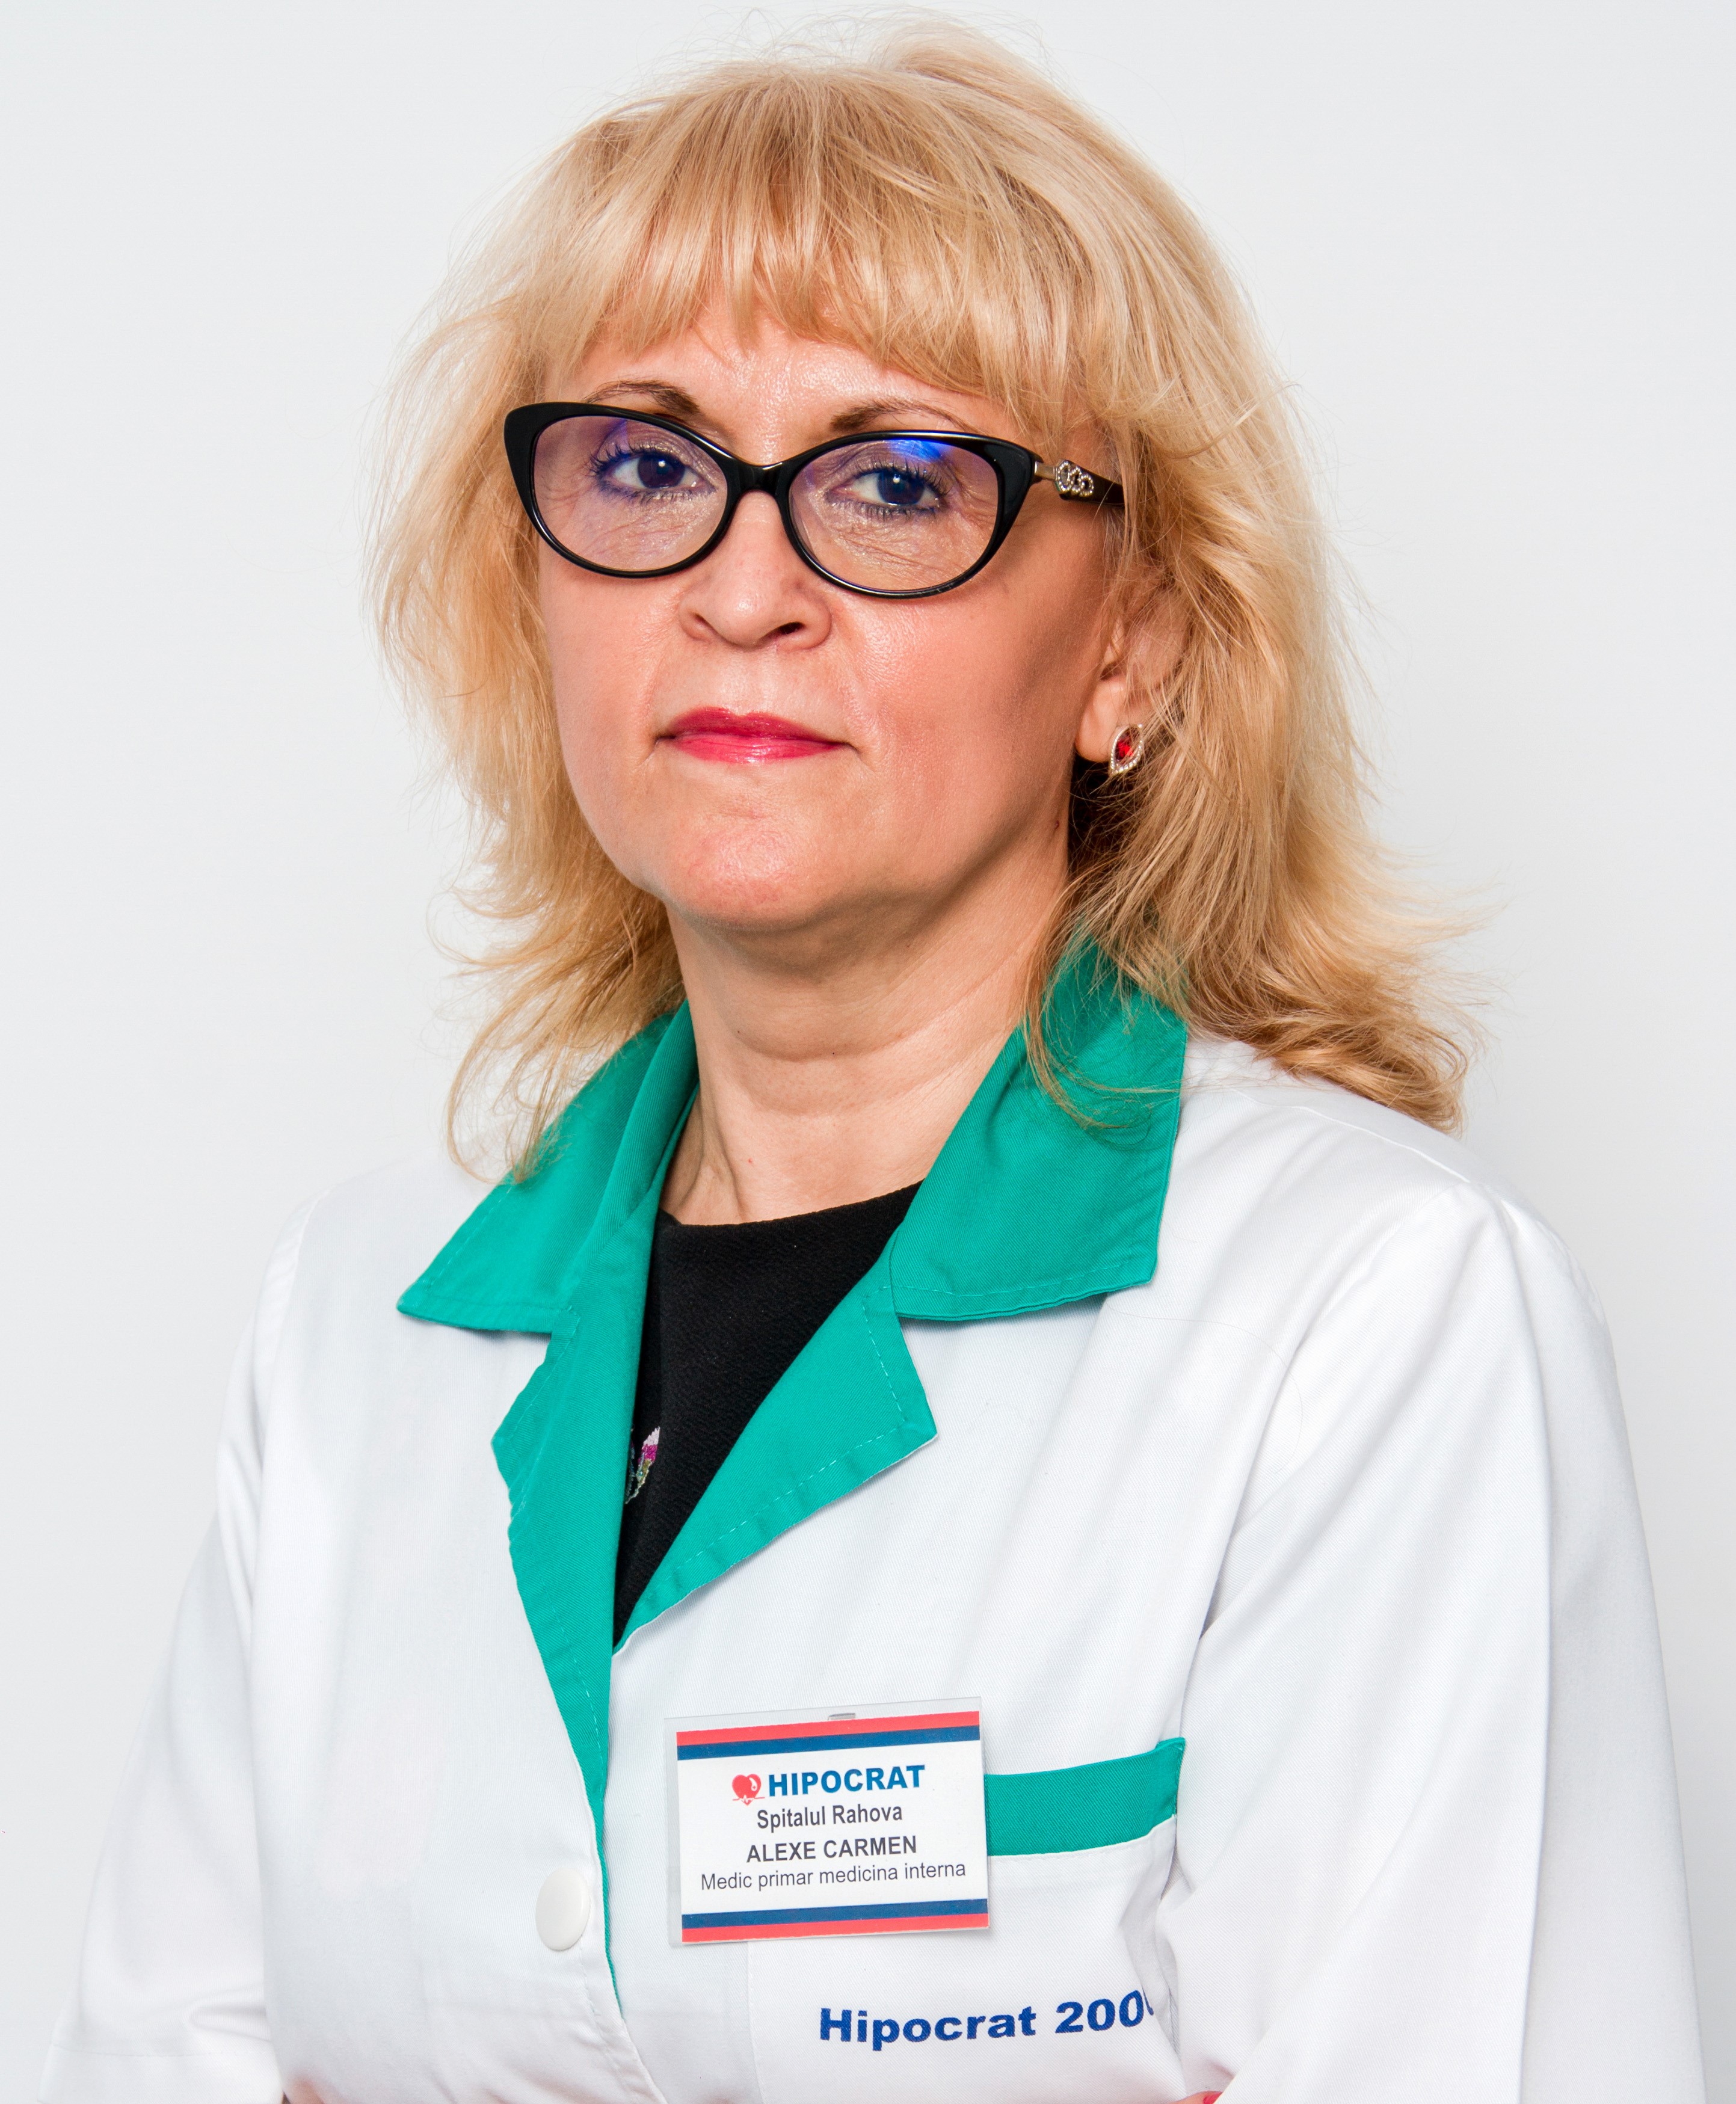 Dr. Carmen Alexe